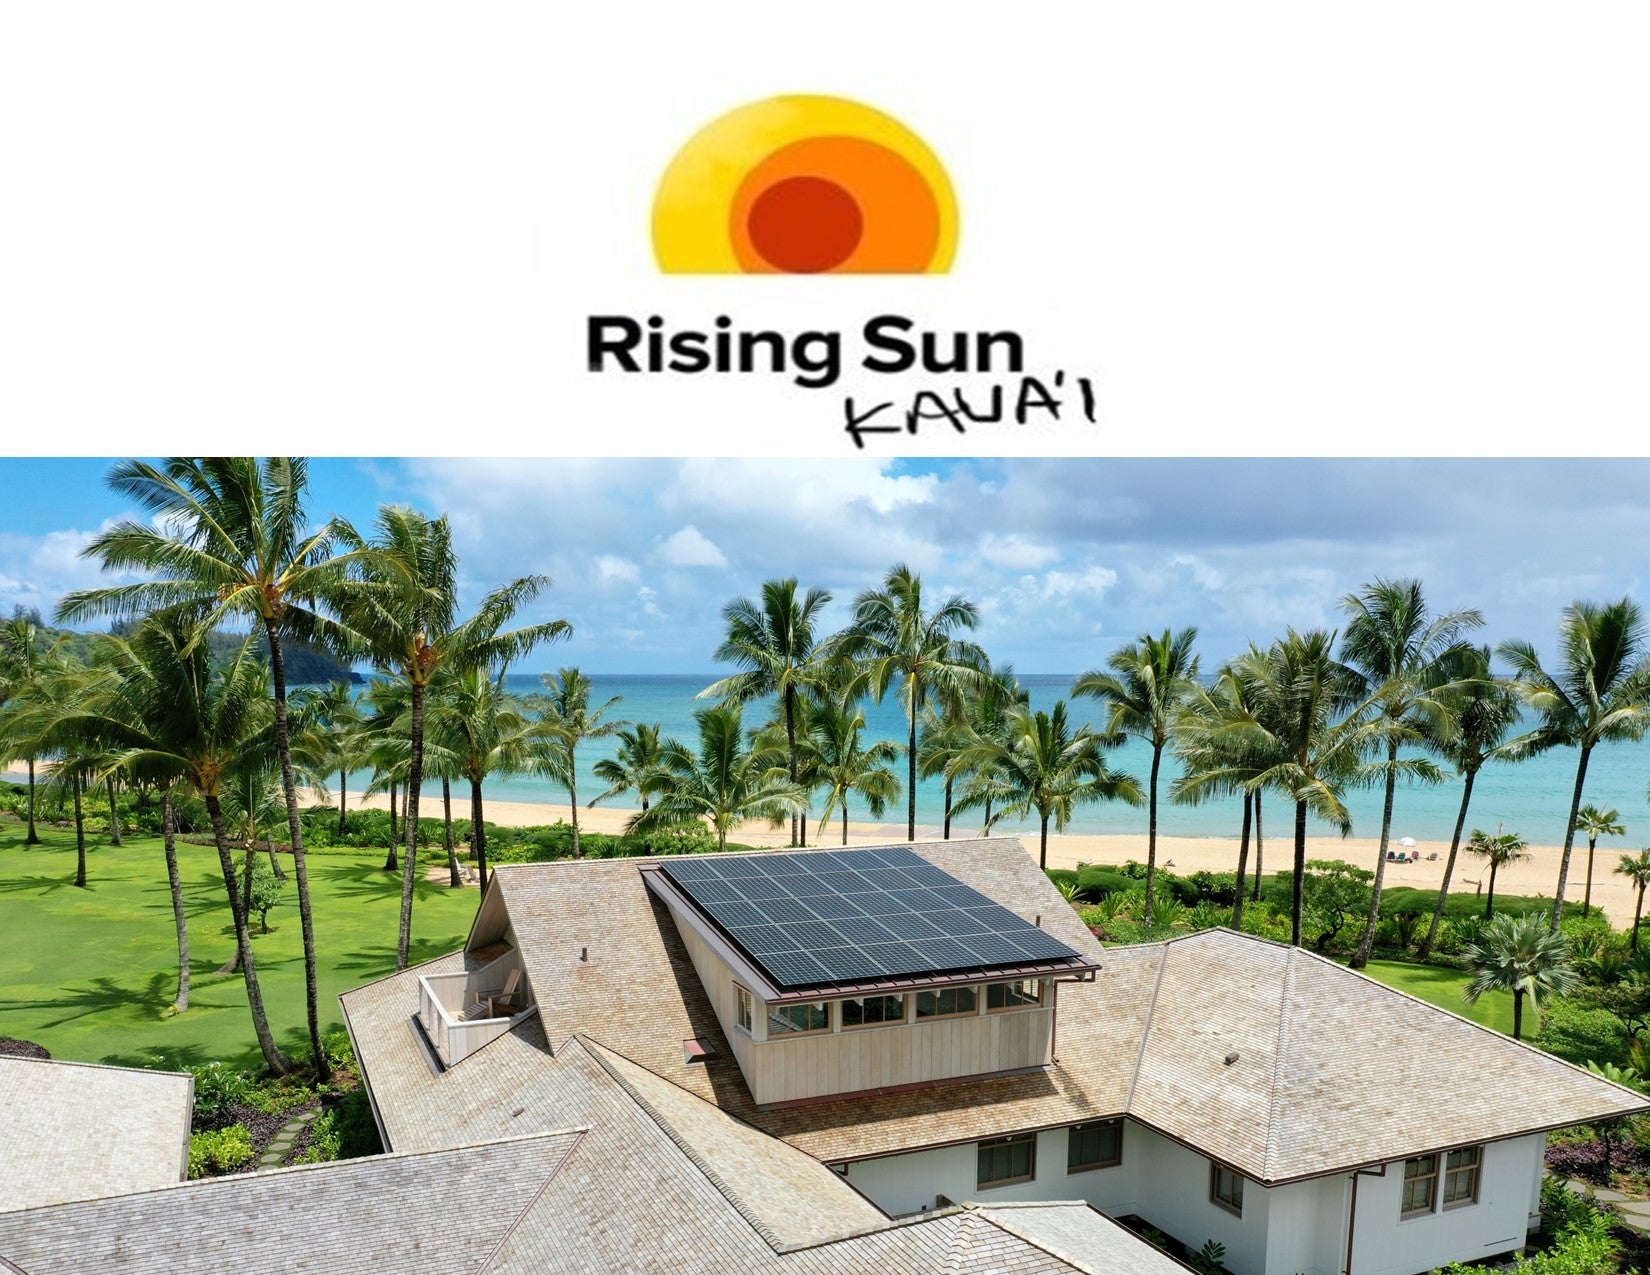 Rising Sun Solar - Kauai logo